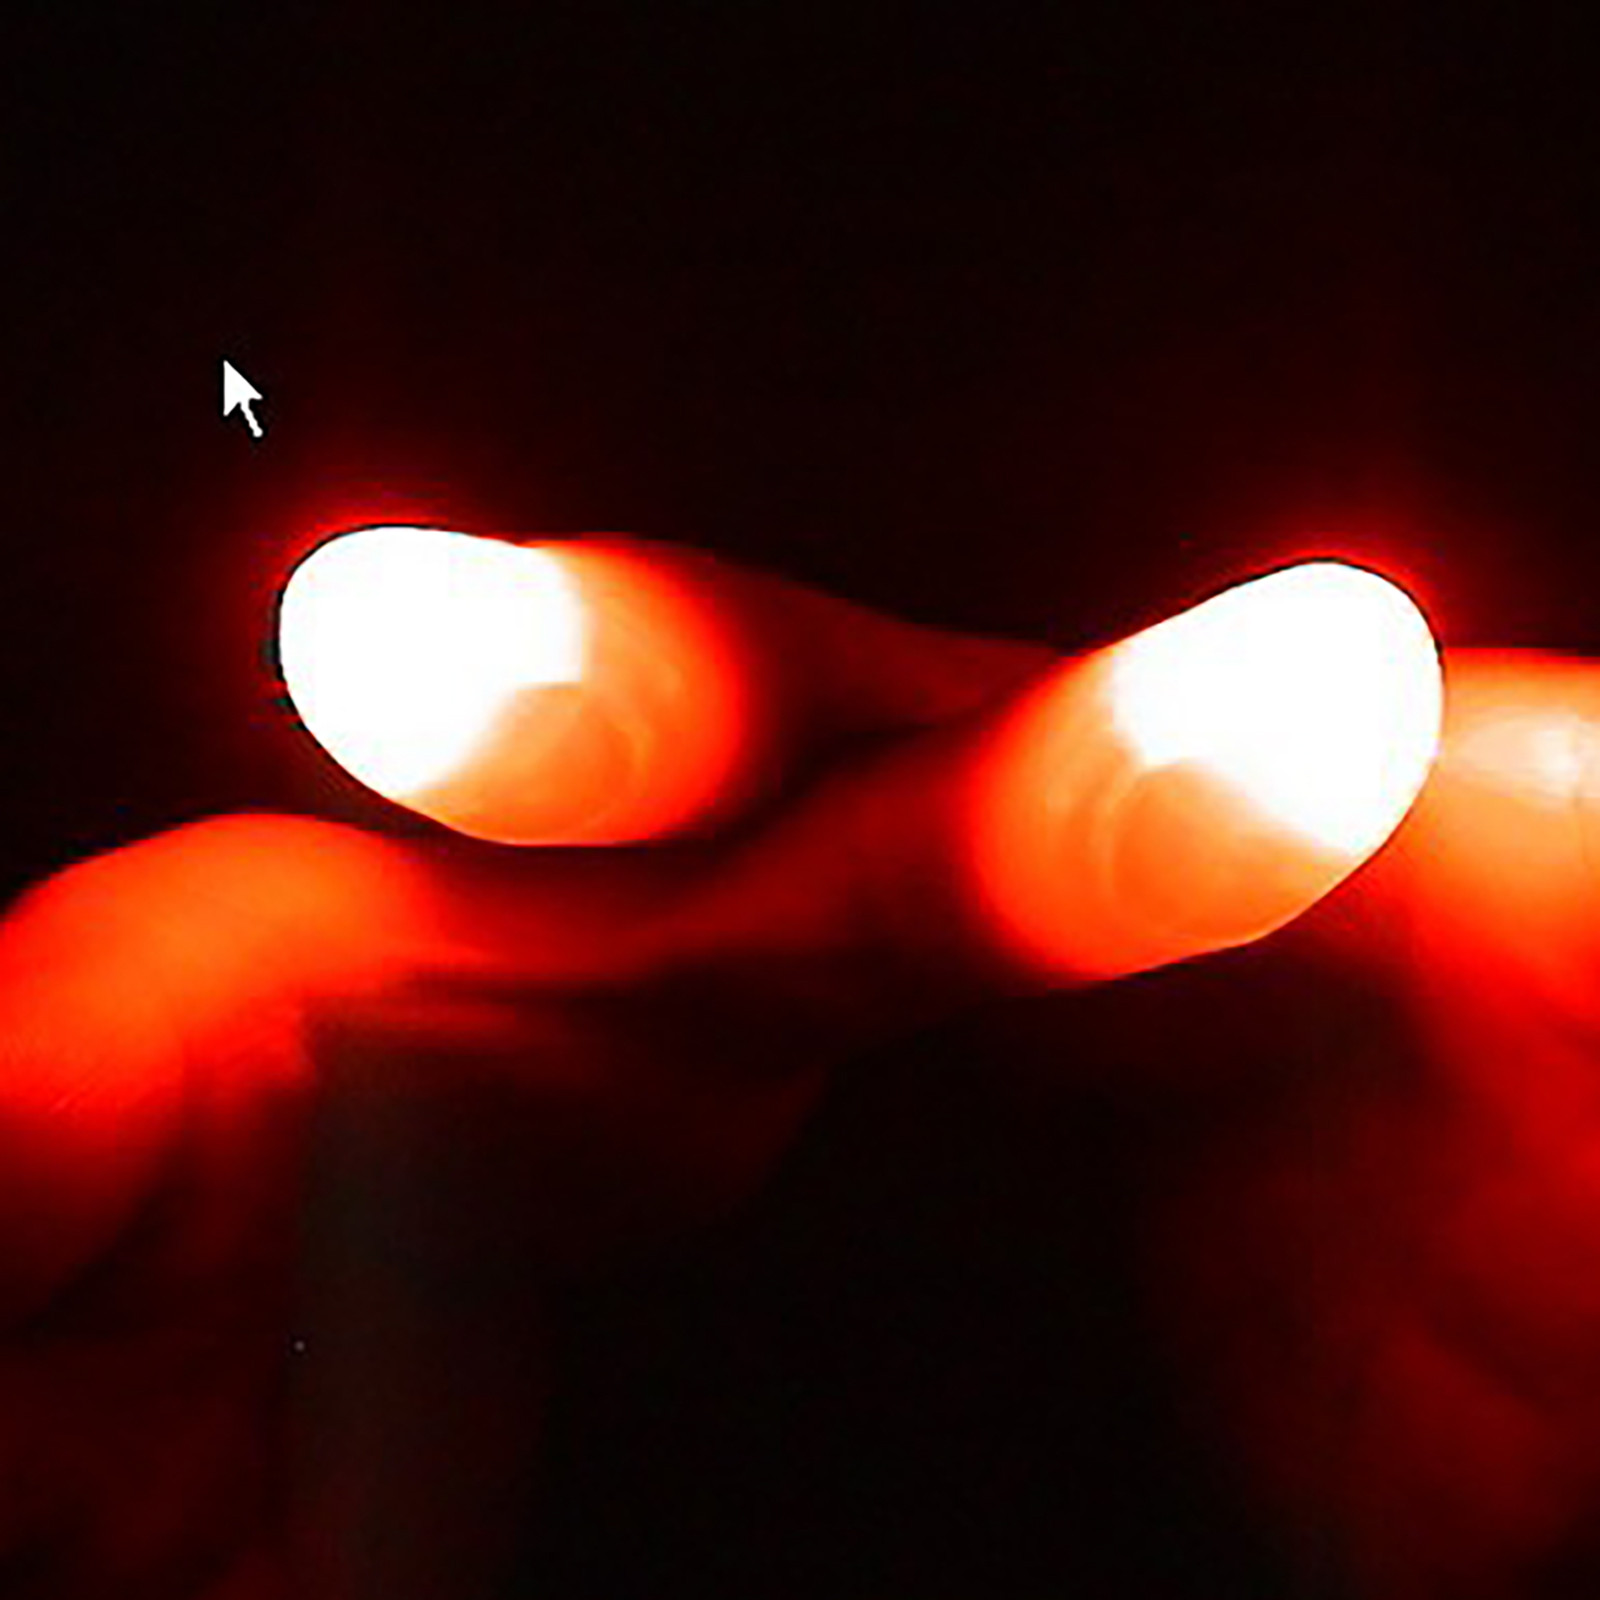 Luminous Toys LED Finger Light Rings Glow Magic Flashing Close Up Trick Classic Parent Child Interactive